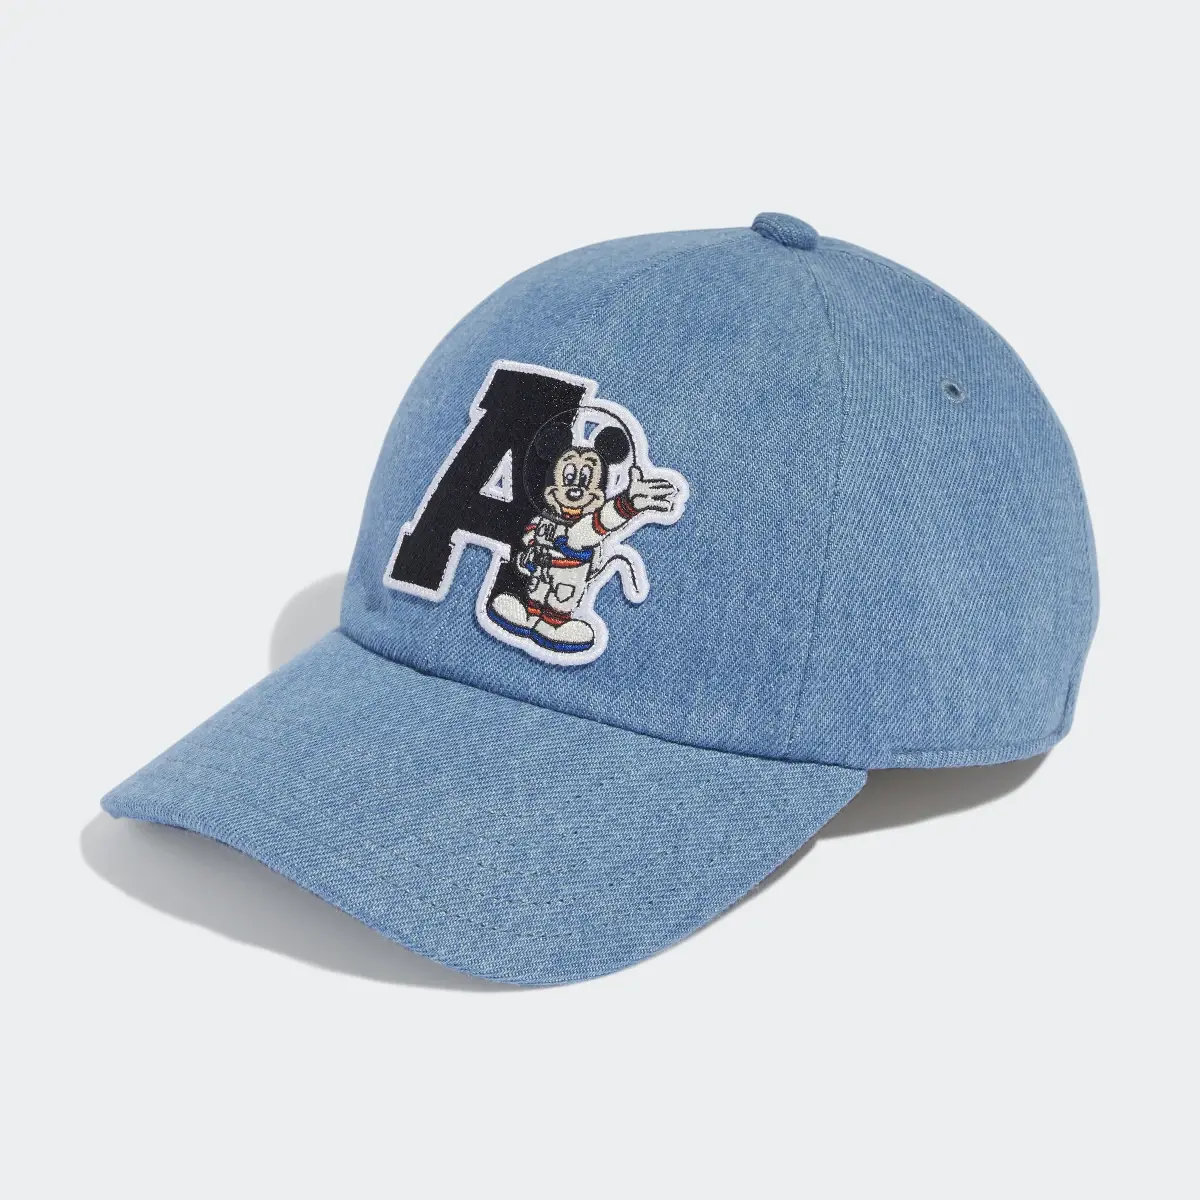 Adidas Baseball Hat. 2